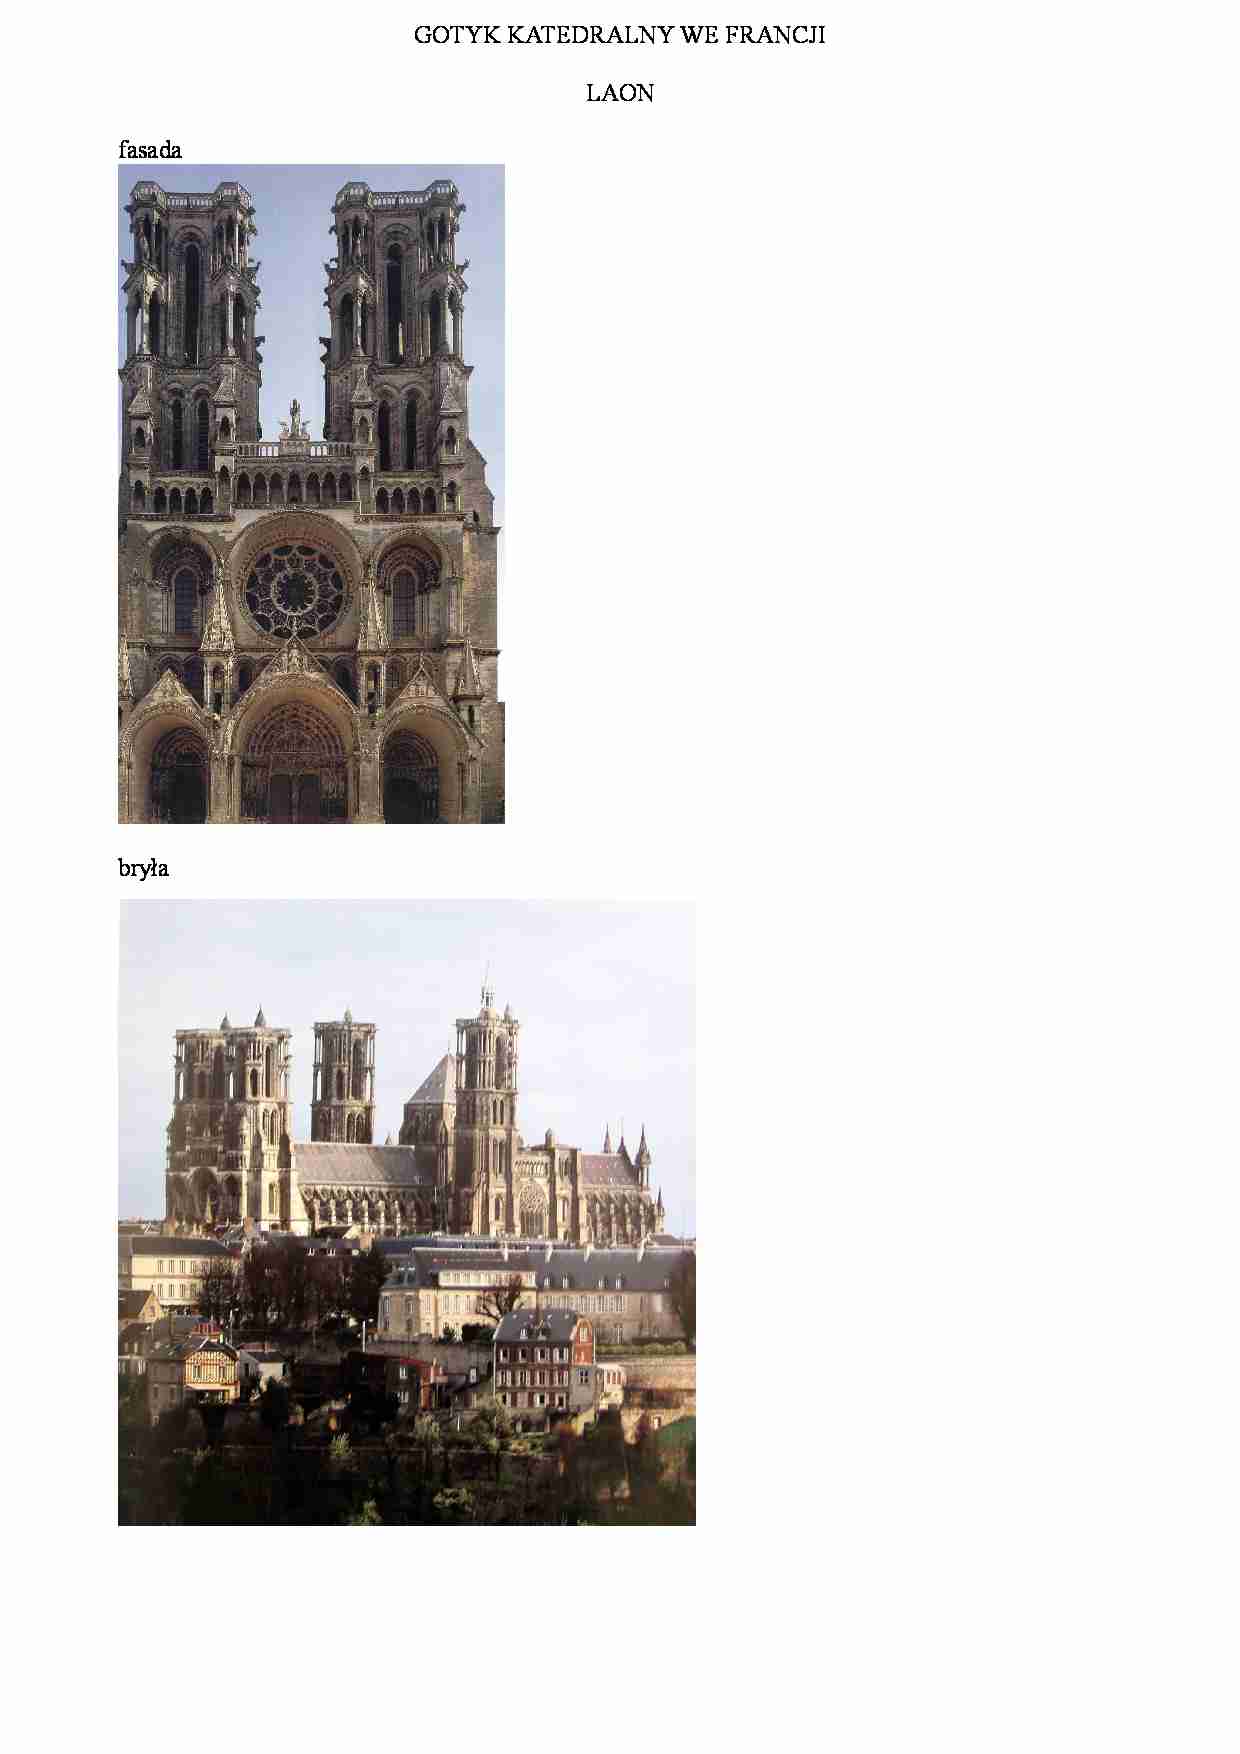 Gotyk katedralny we Francji-Laon - strona 1